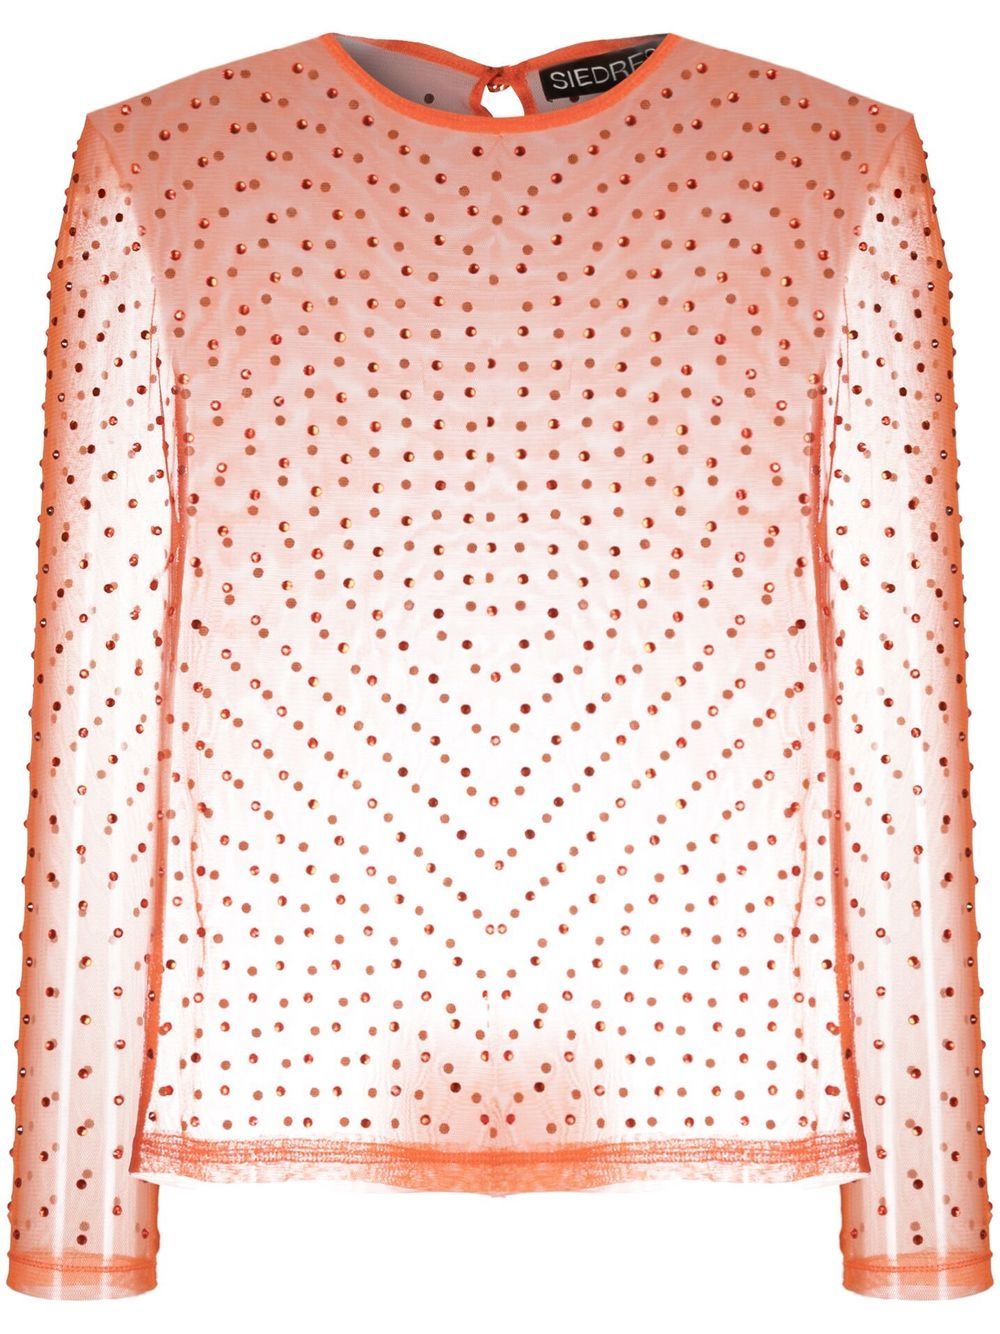 SIEDRES crystal-embellisment sheer blouse - Orange von SIEDRES